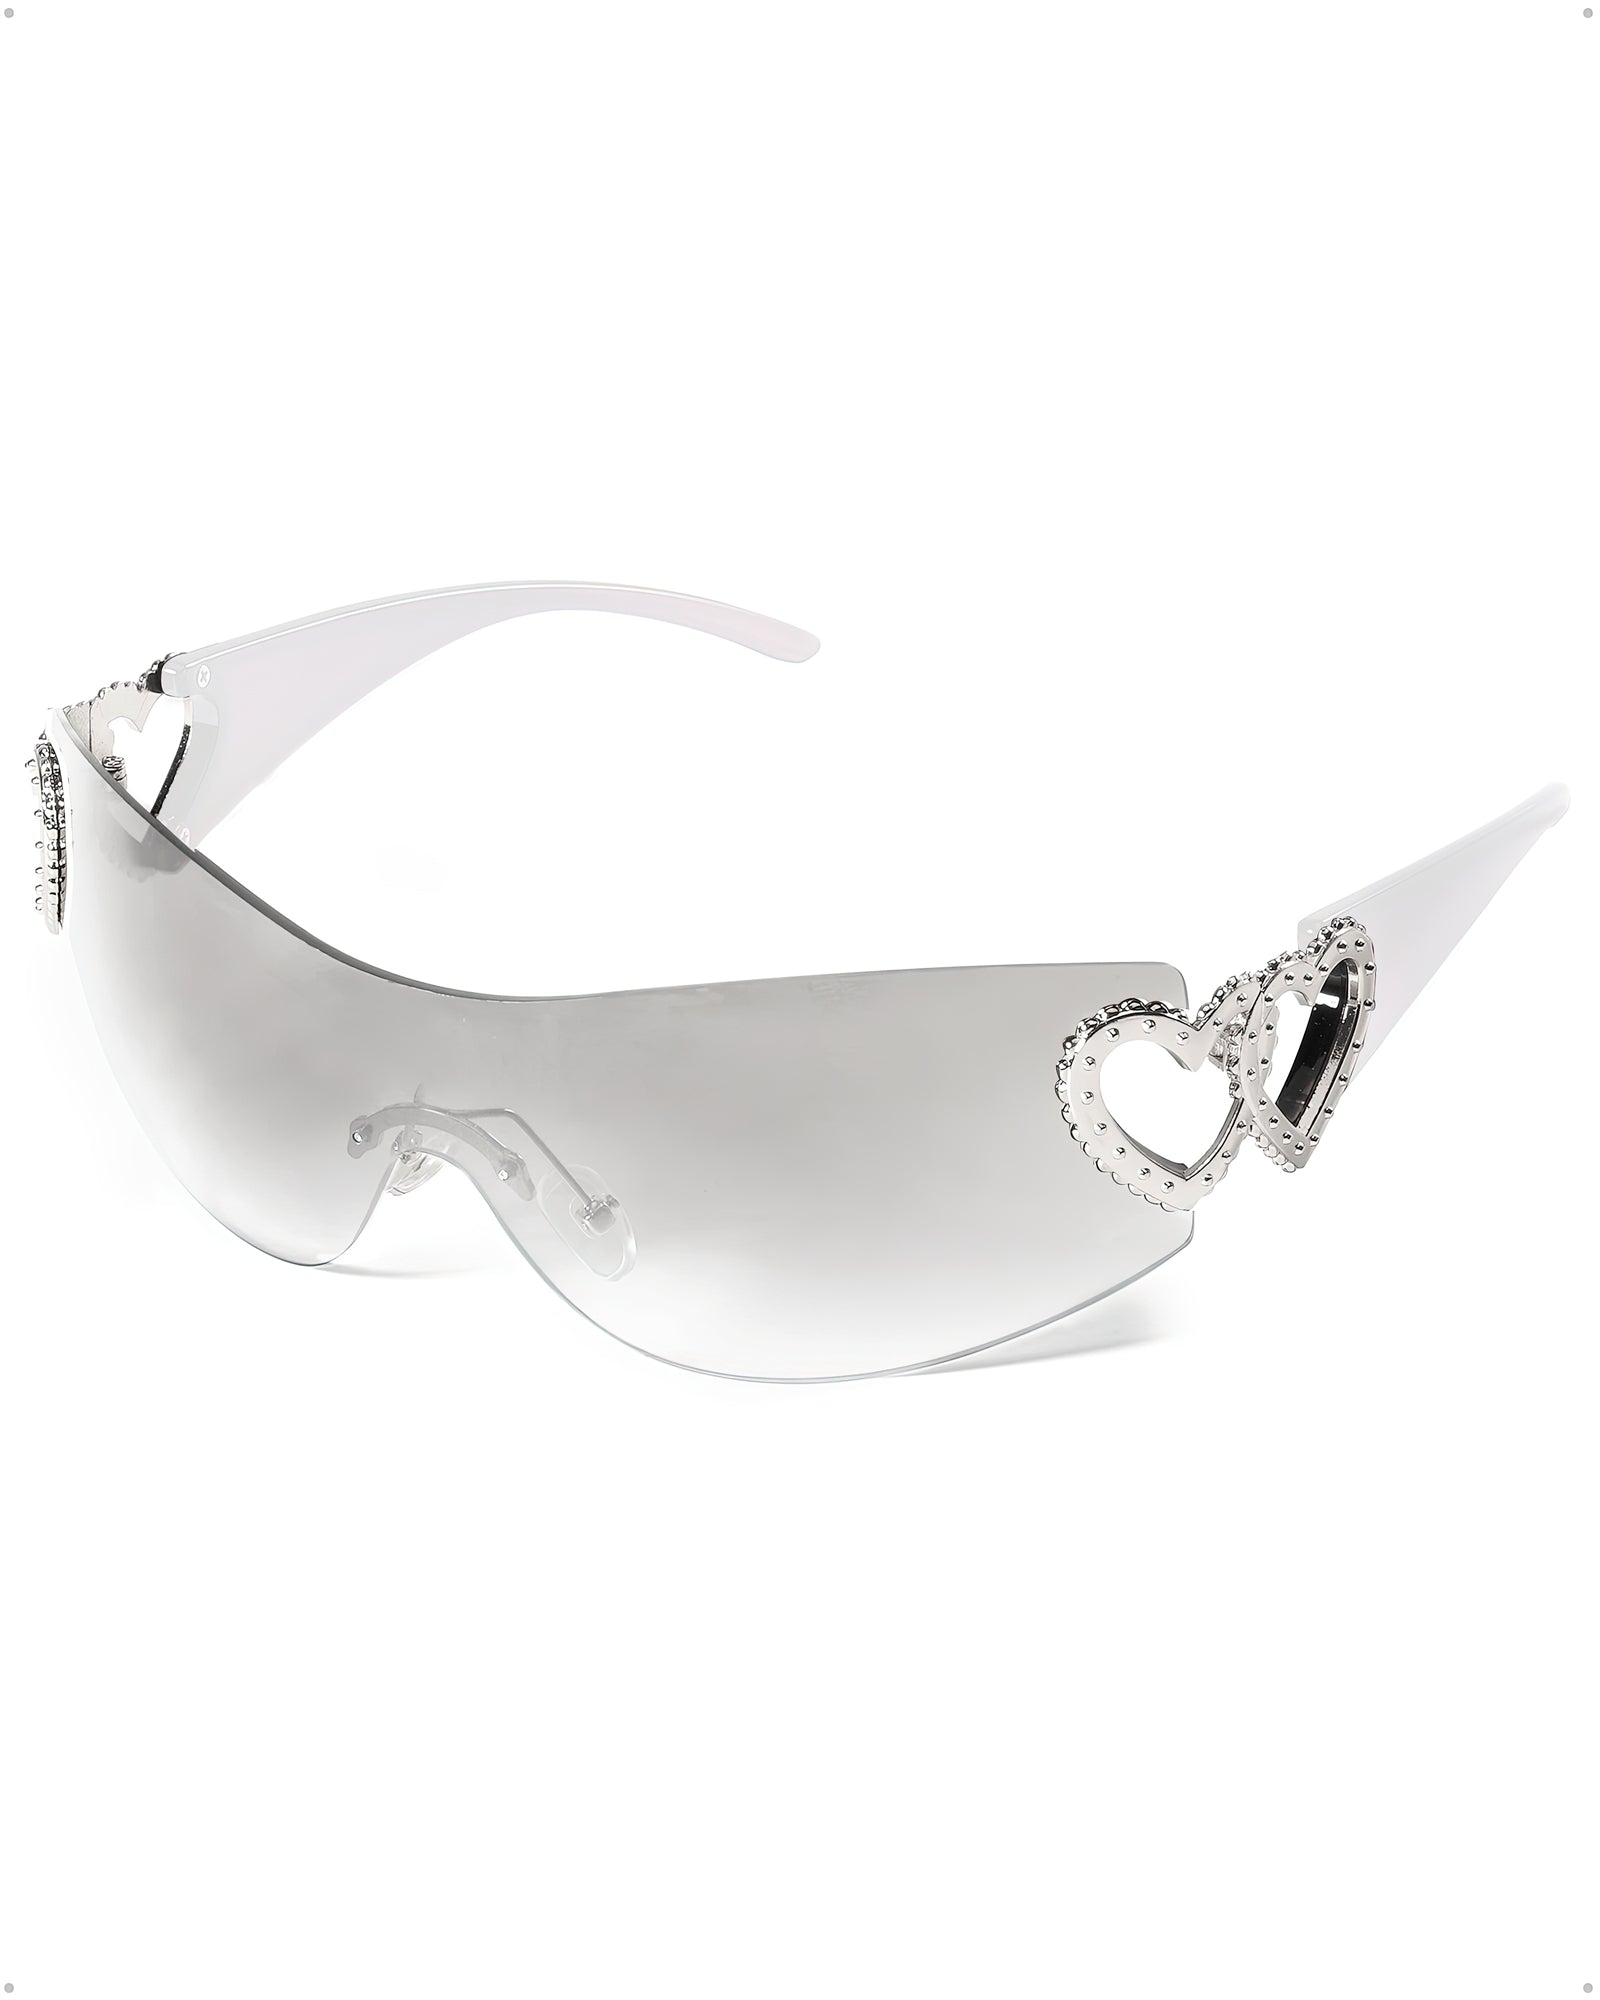 La Vista Eye Wear Clip on-Square-Gray-Mod : LV 005 - Color : 03 –  lavidavision